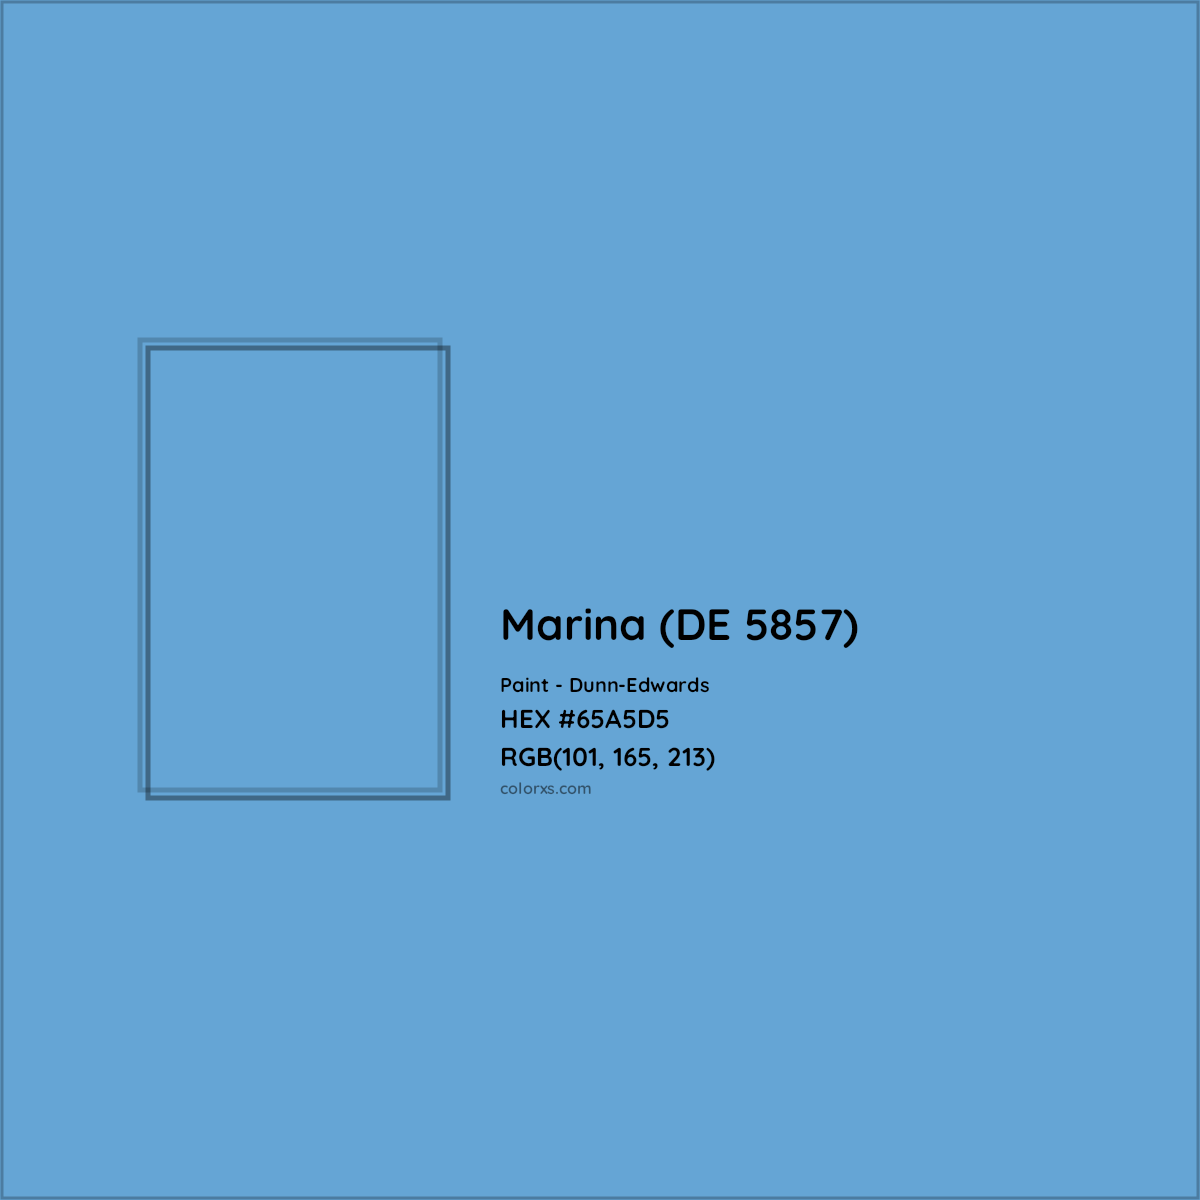 HEX #65A5D5 Marina (DE 5857) Paint Dunn-Edwards - Color Code